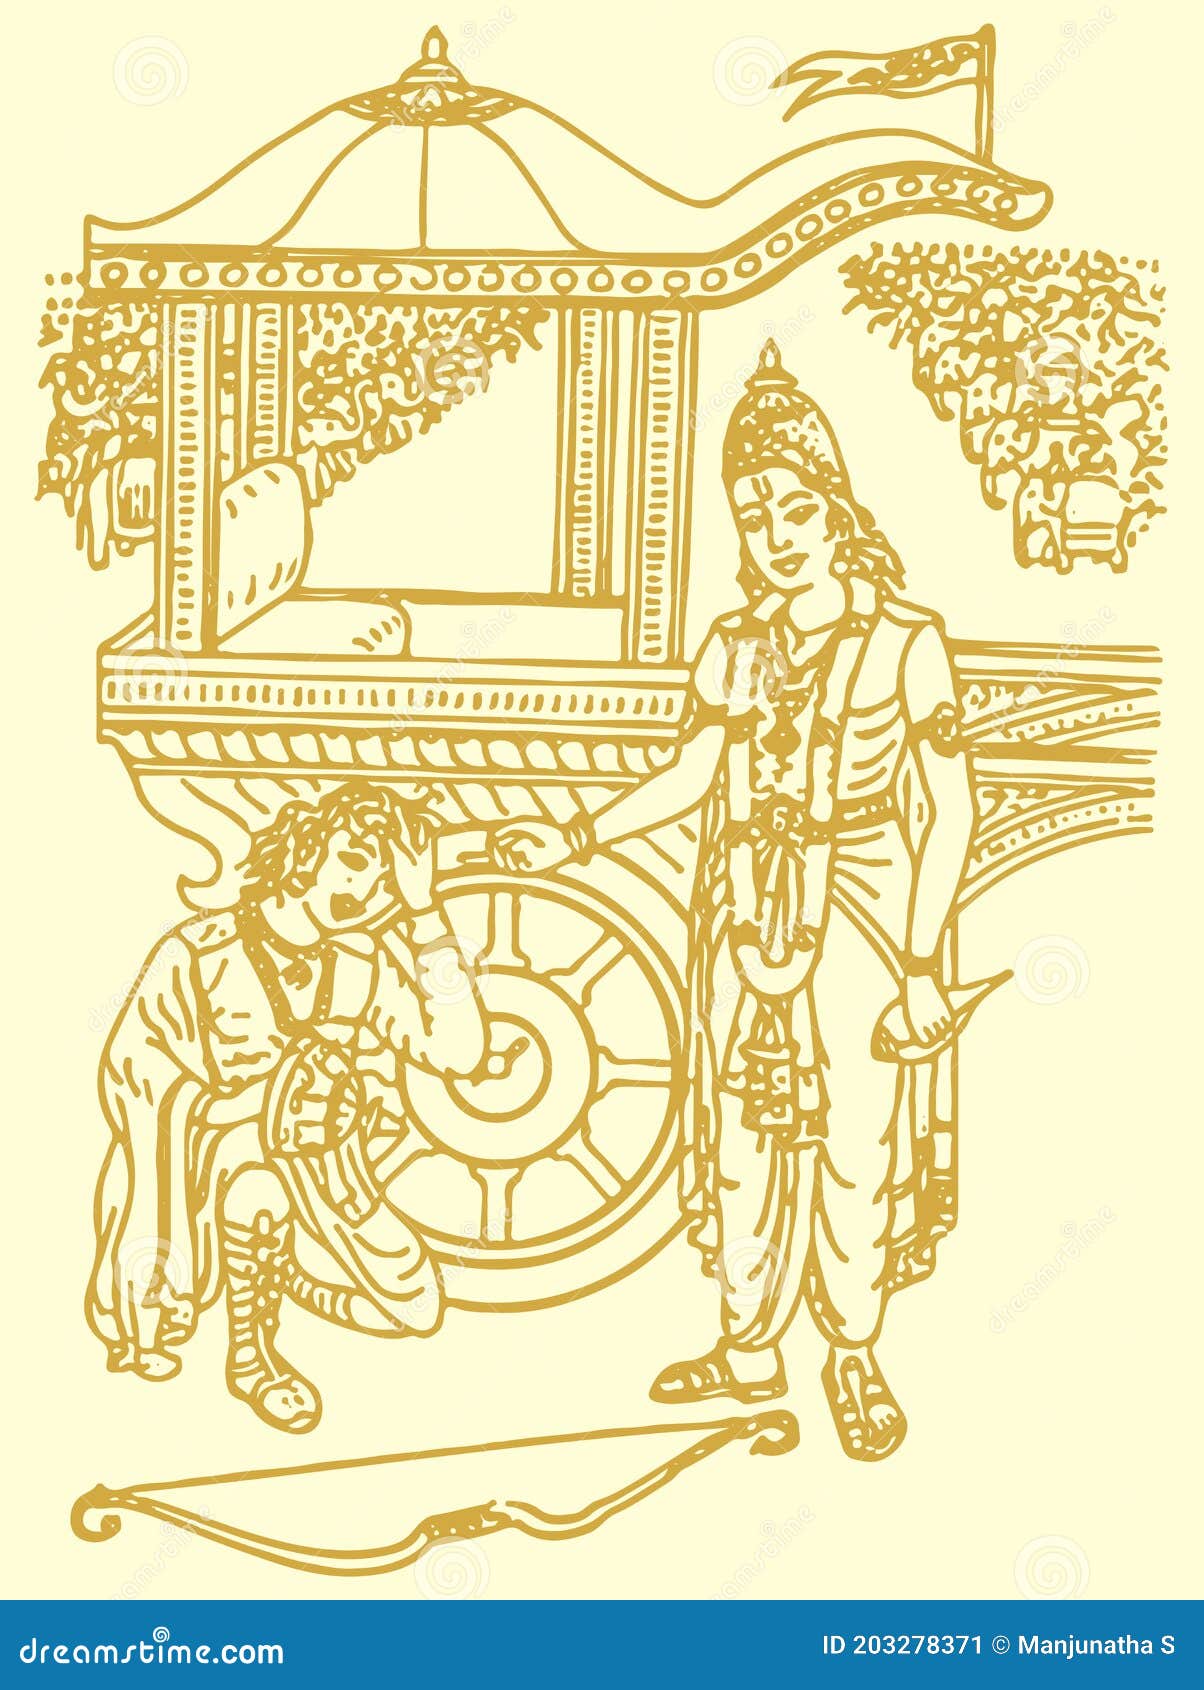 The Bhagavad Gita - Key Points - Annenberg Learner